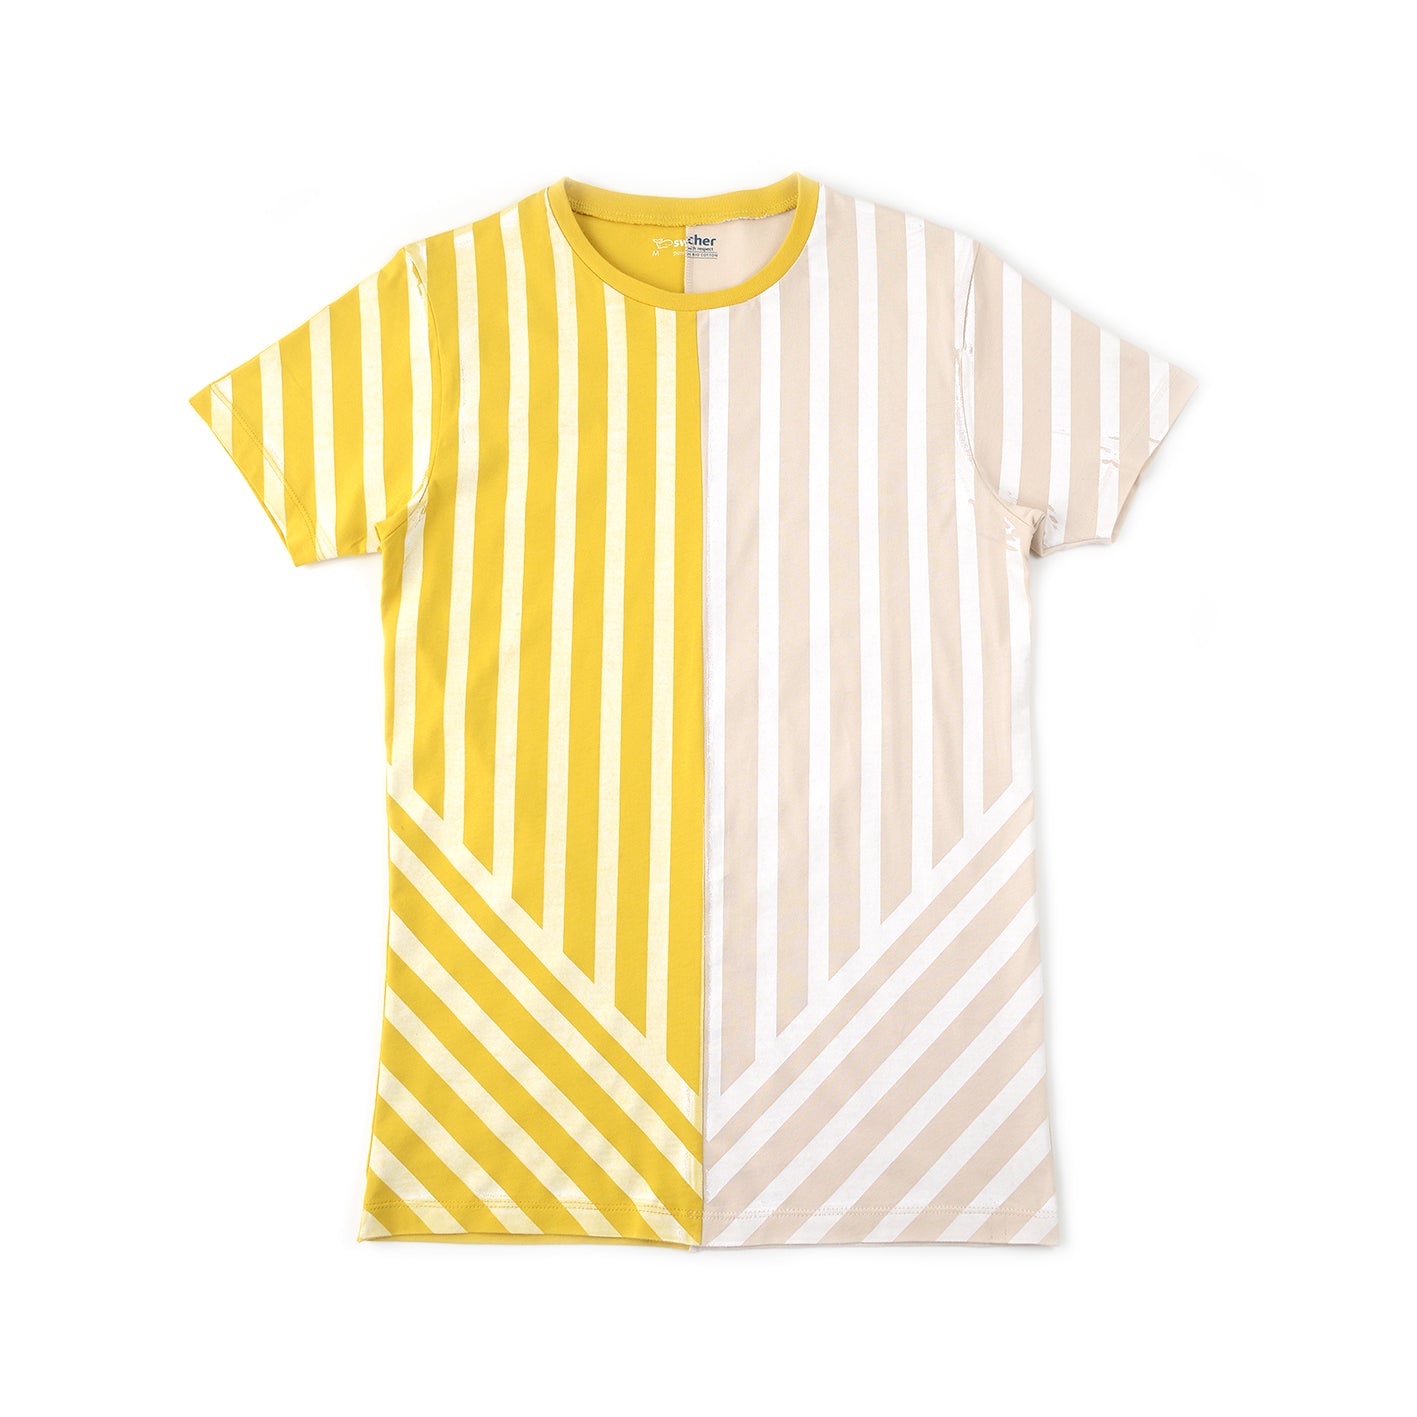 Asymmetrical stripes printed T-Shirt